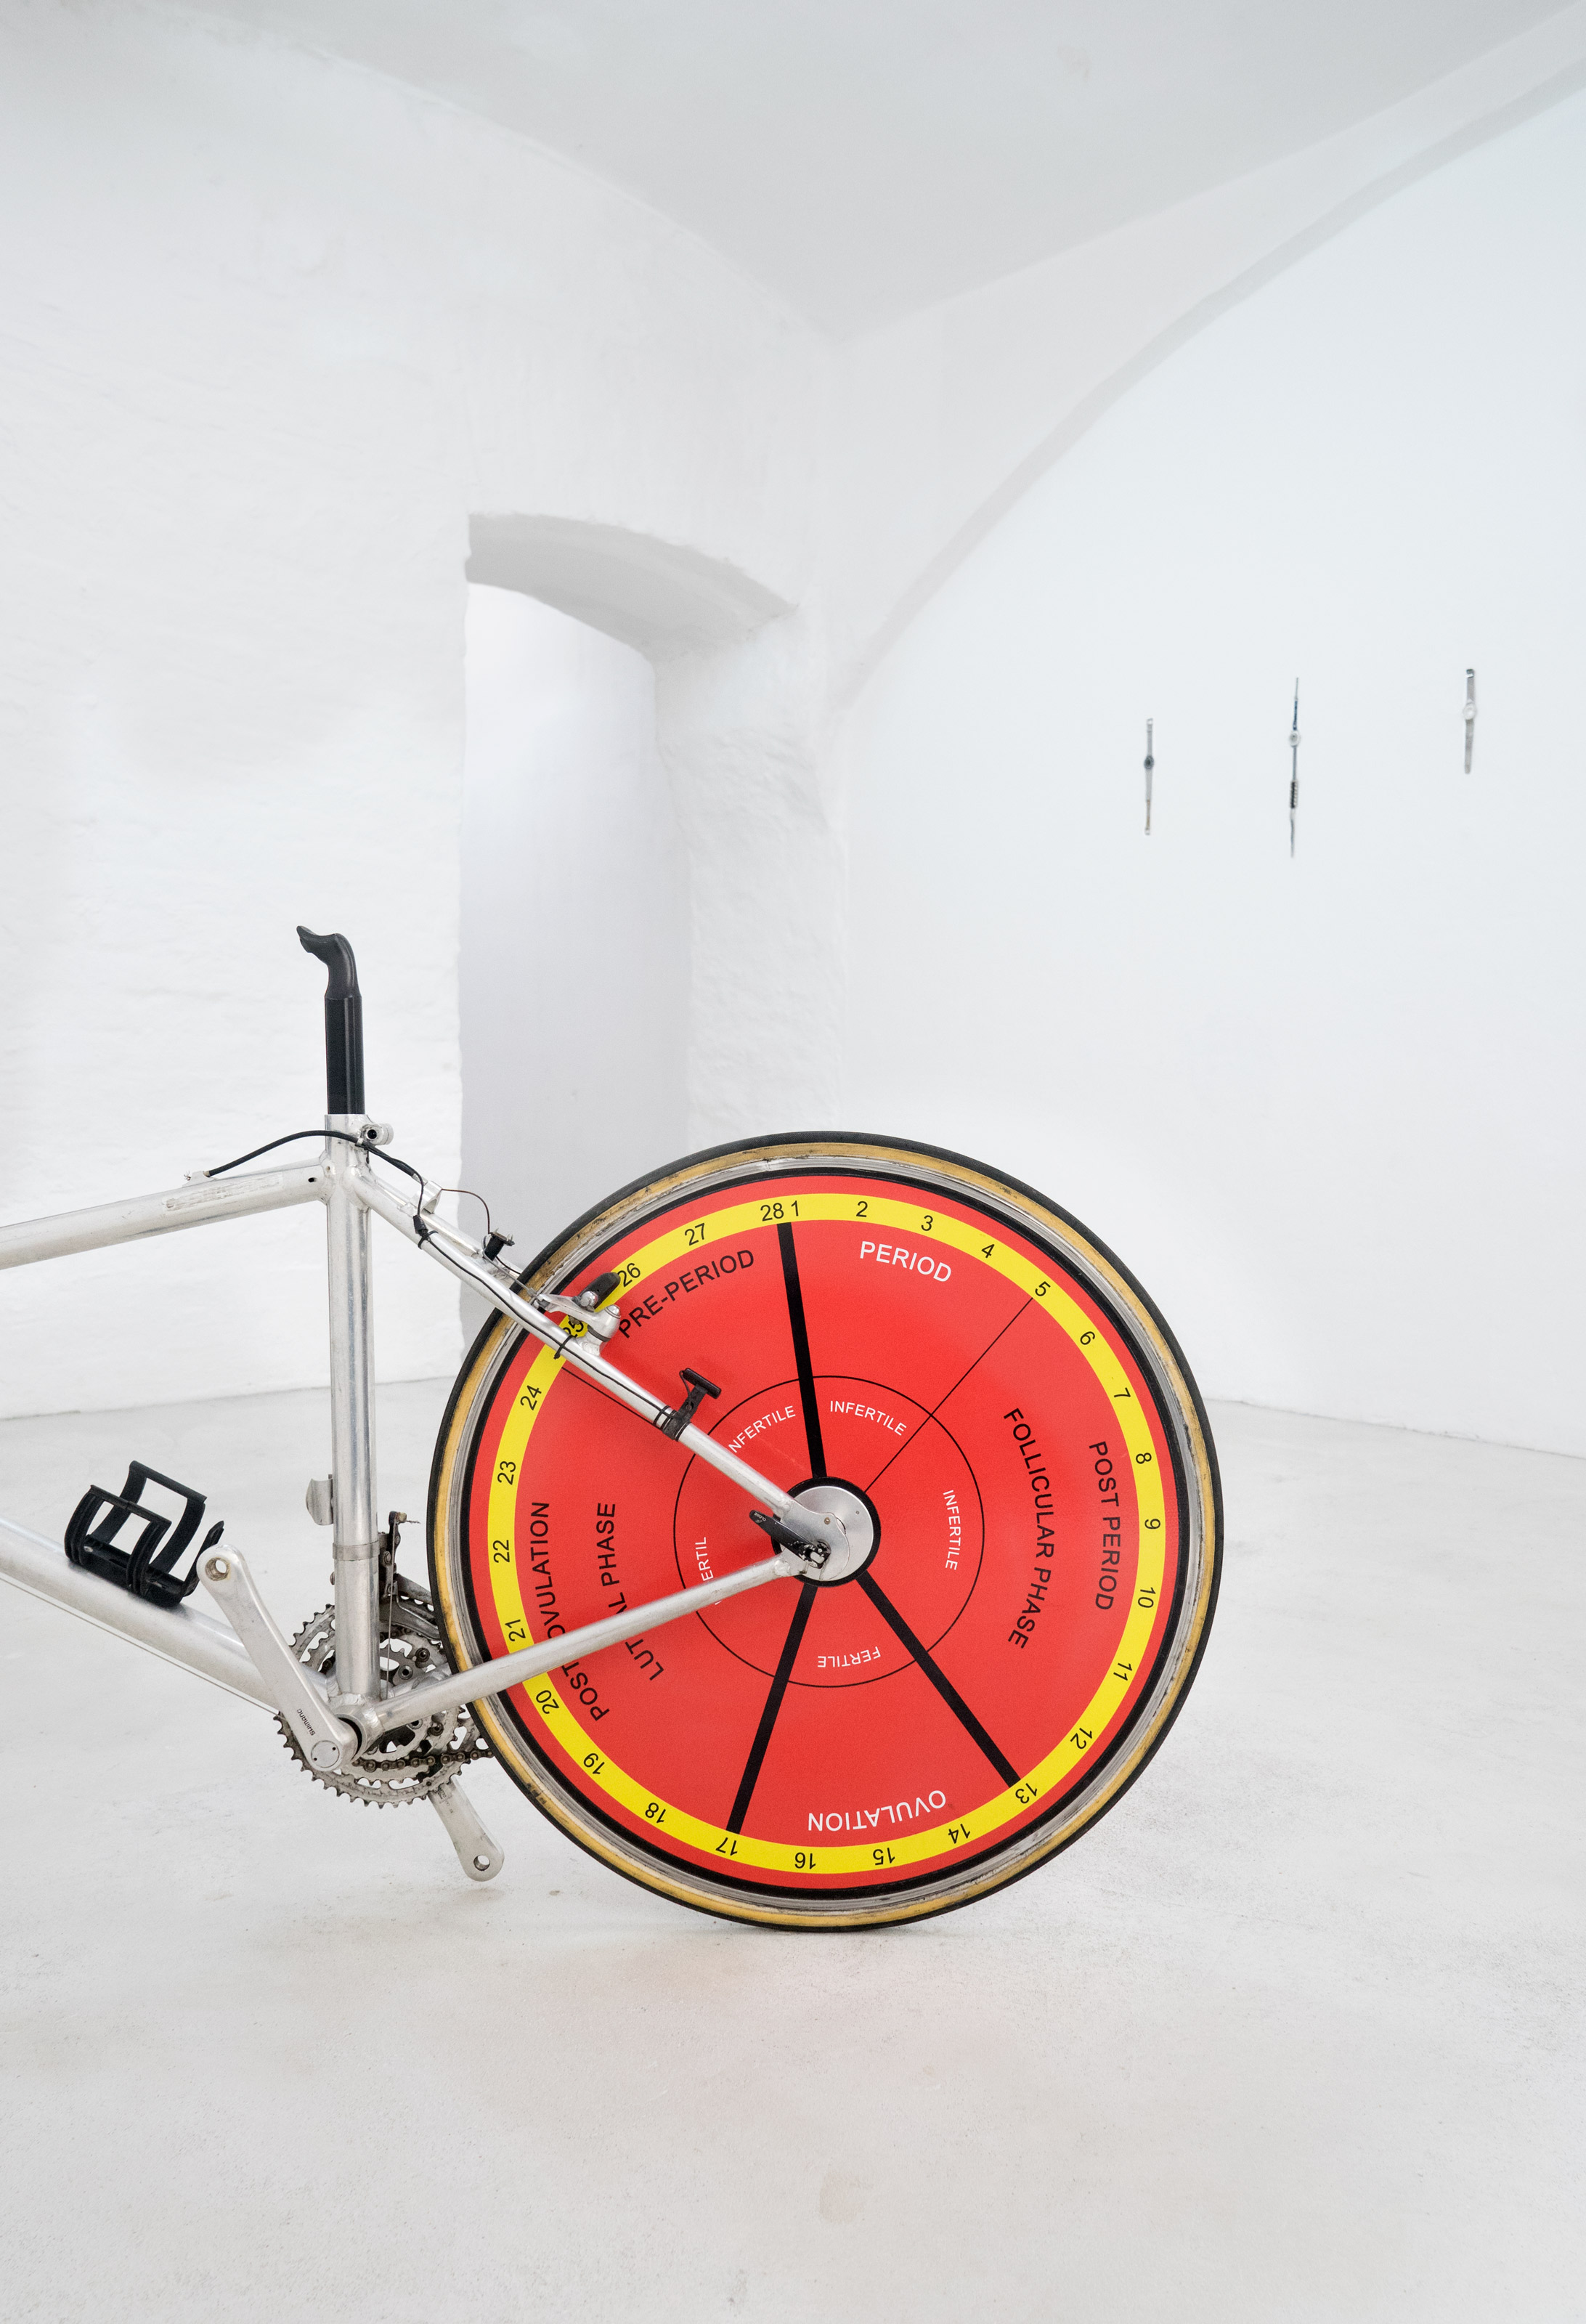 Lucia Elena Průša, Cycle, 2018, Aluminium, steel, rubber, plastic, UV-print, 14 x 85 x 60 cm